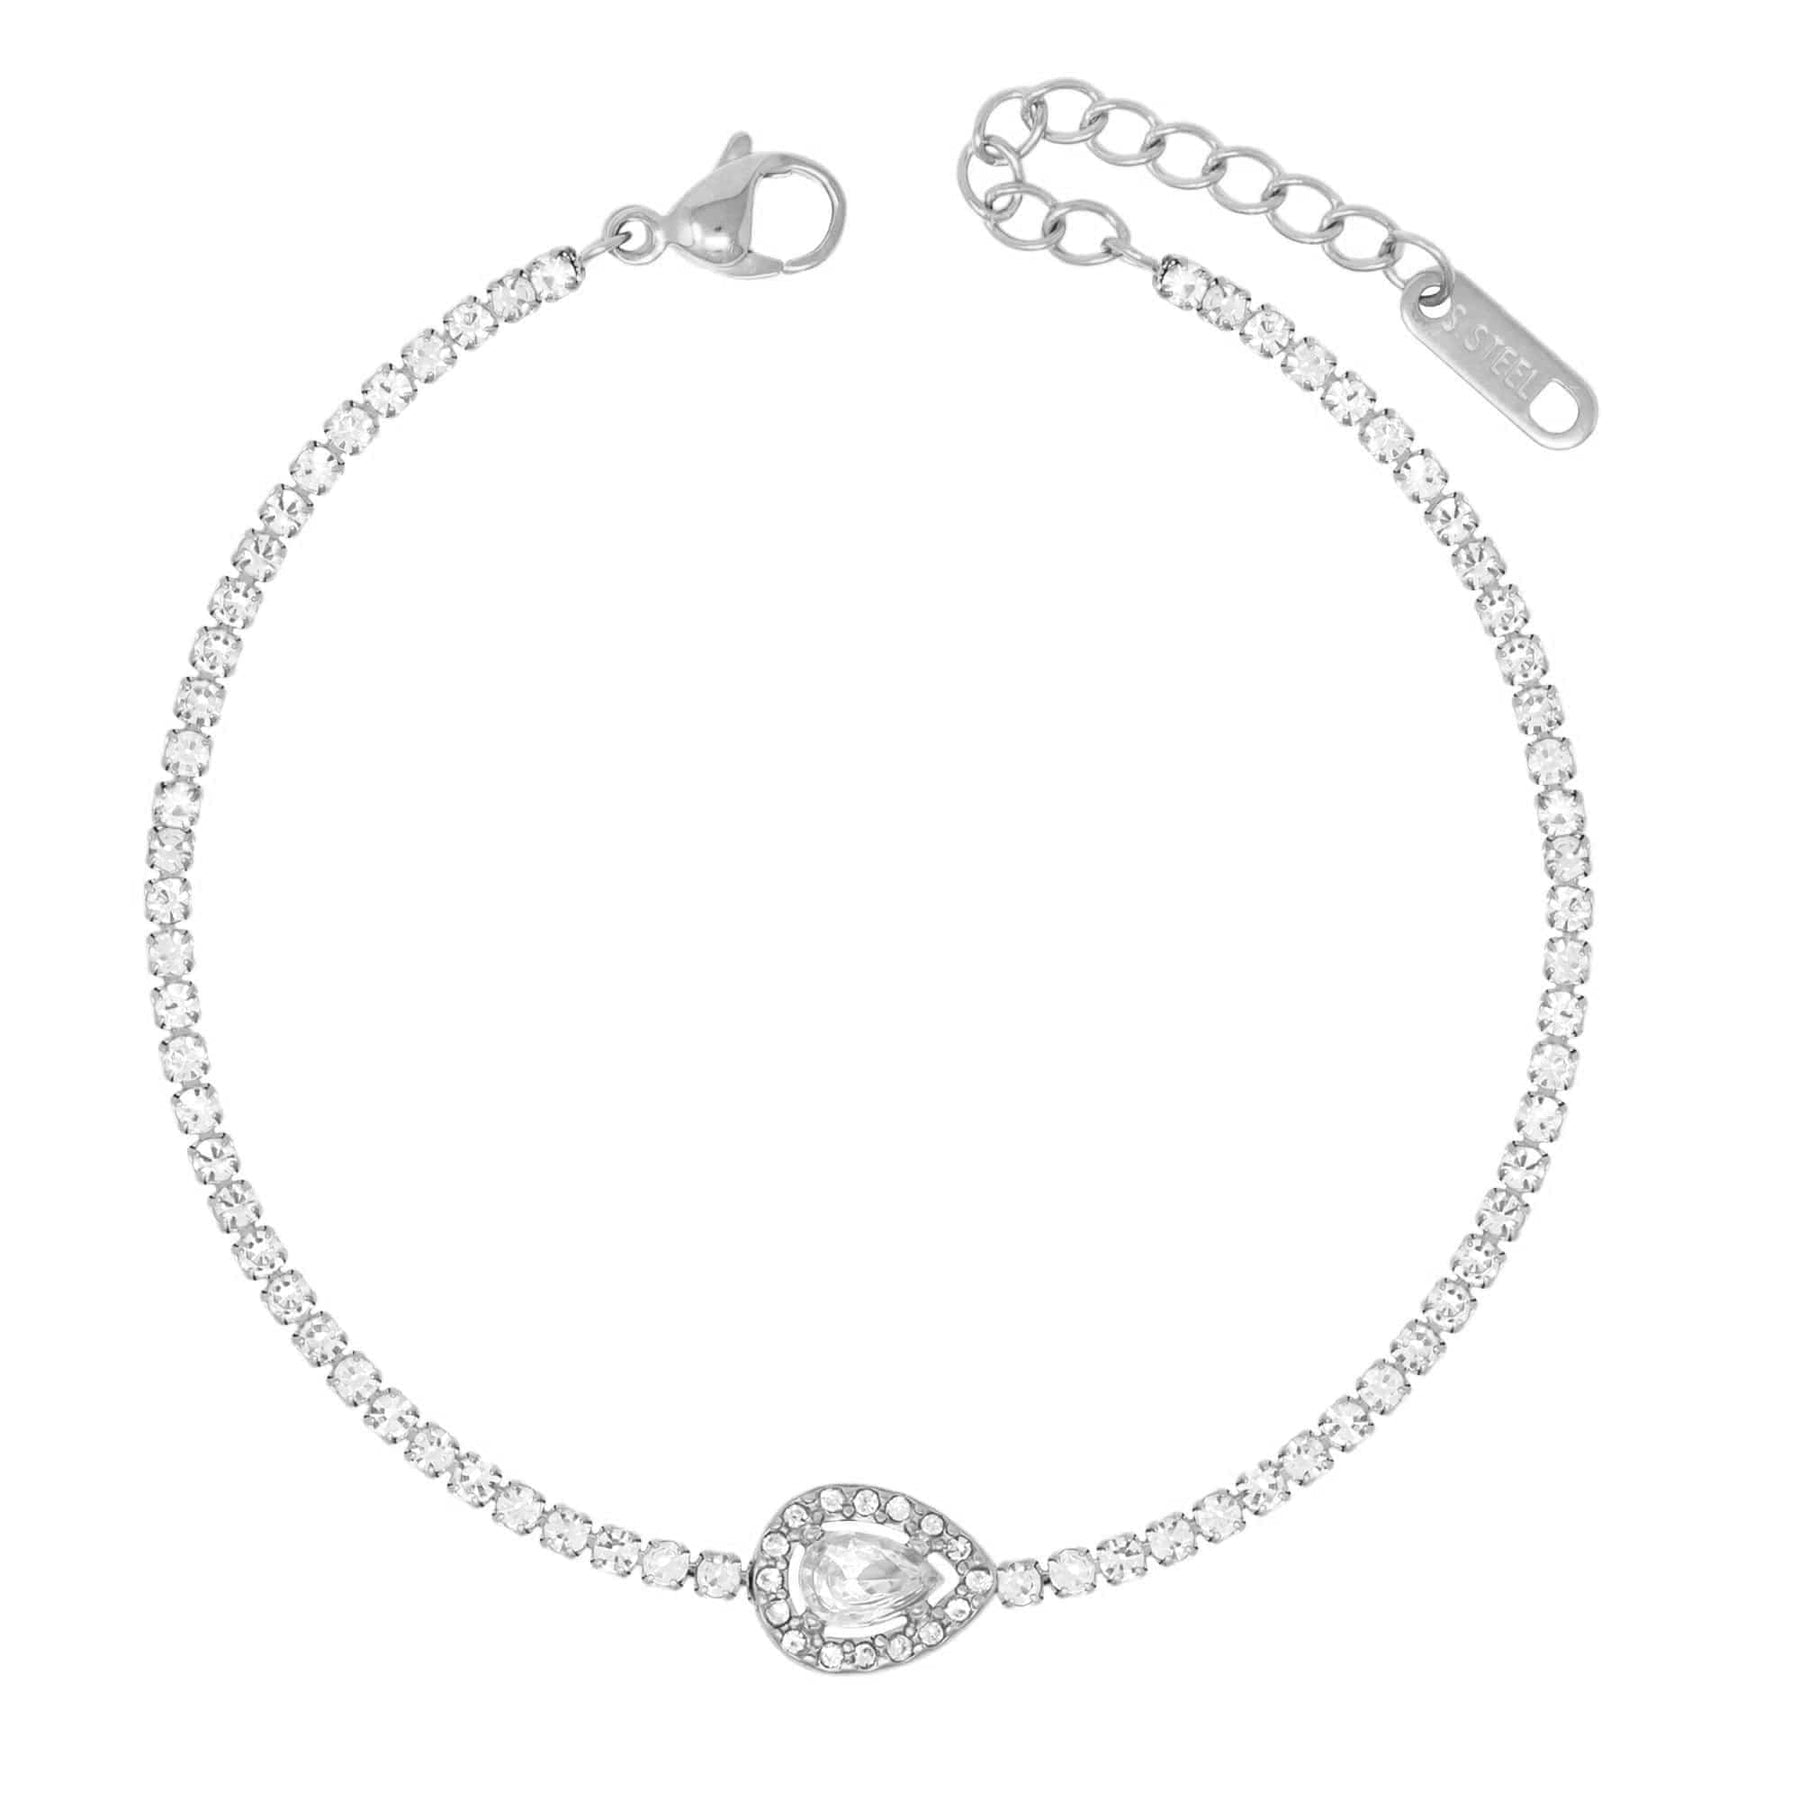 BohoMoon Stainless Steel Graceful Bracelet Silver